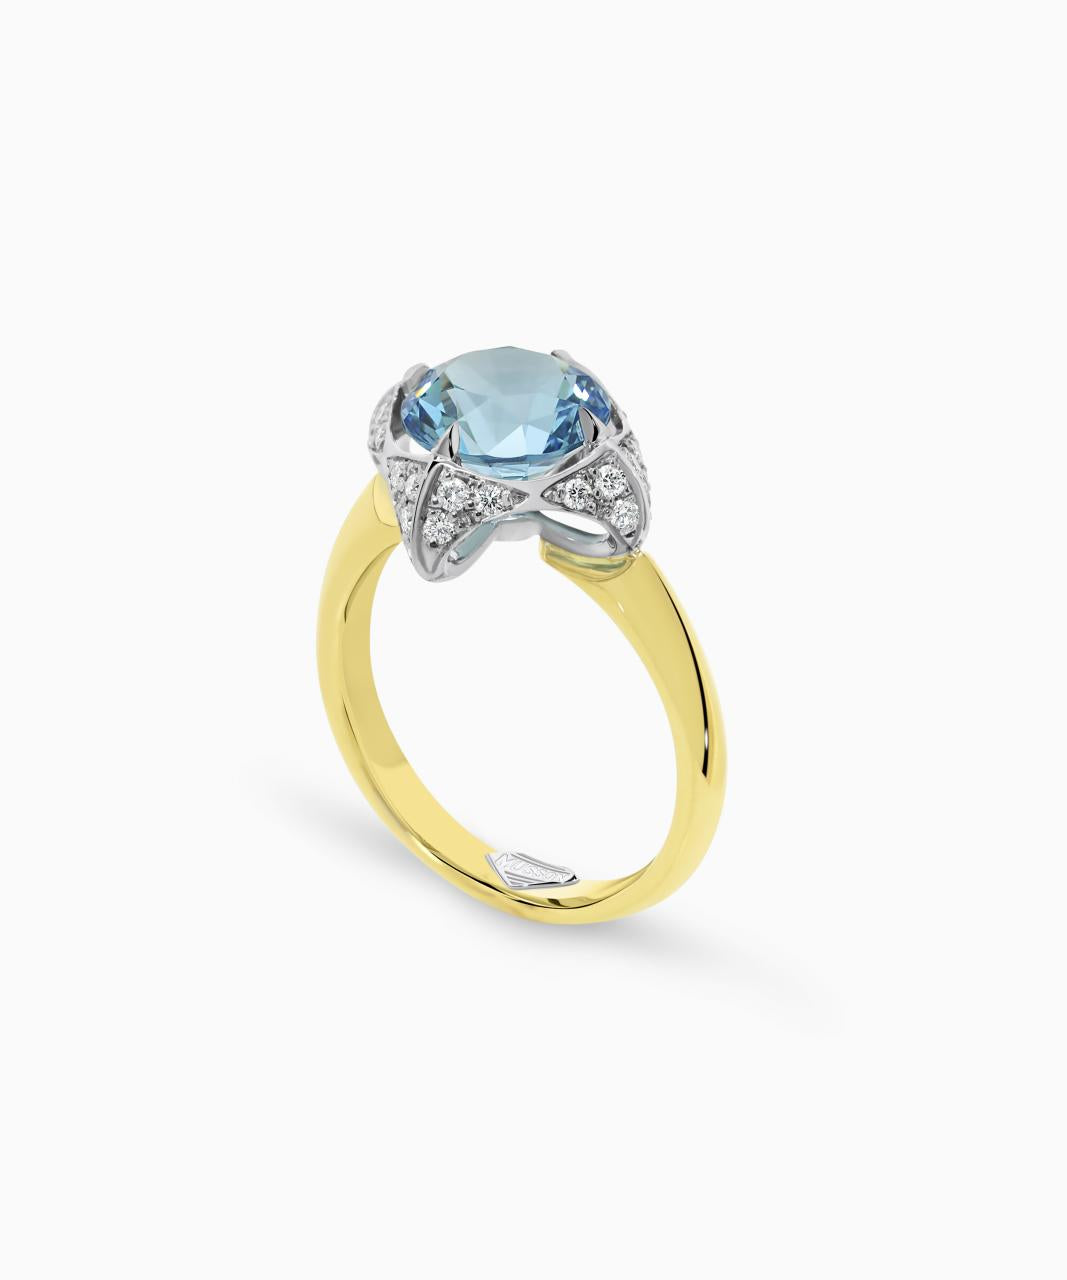 Empress Blue Topaz Ring